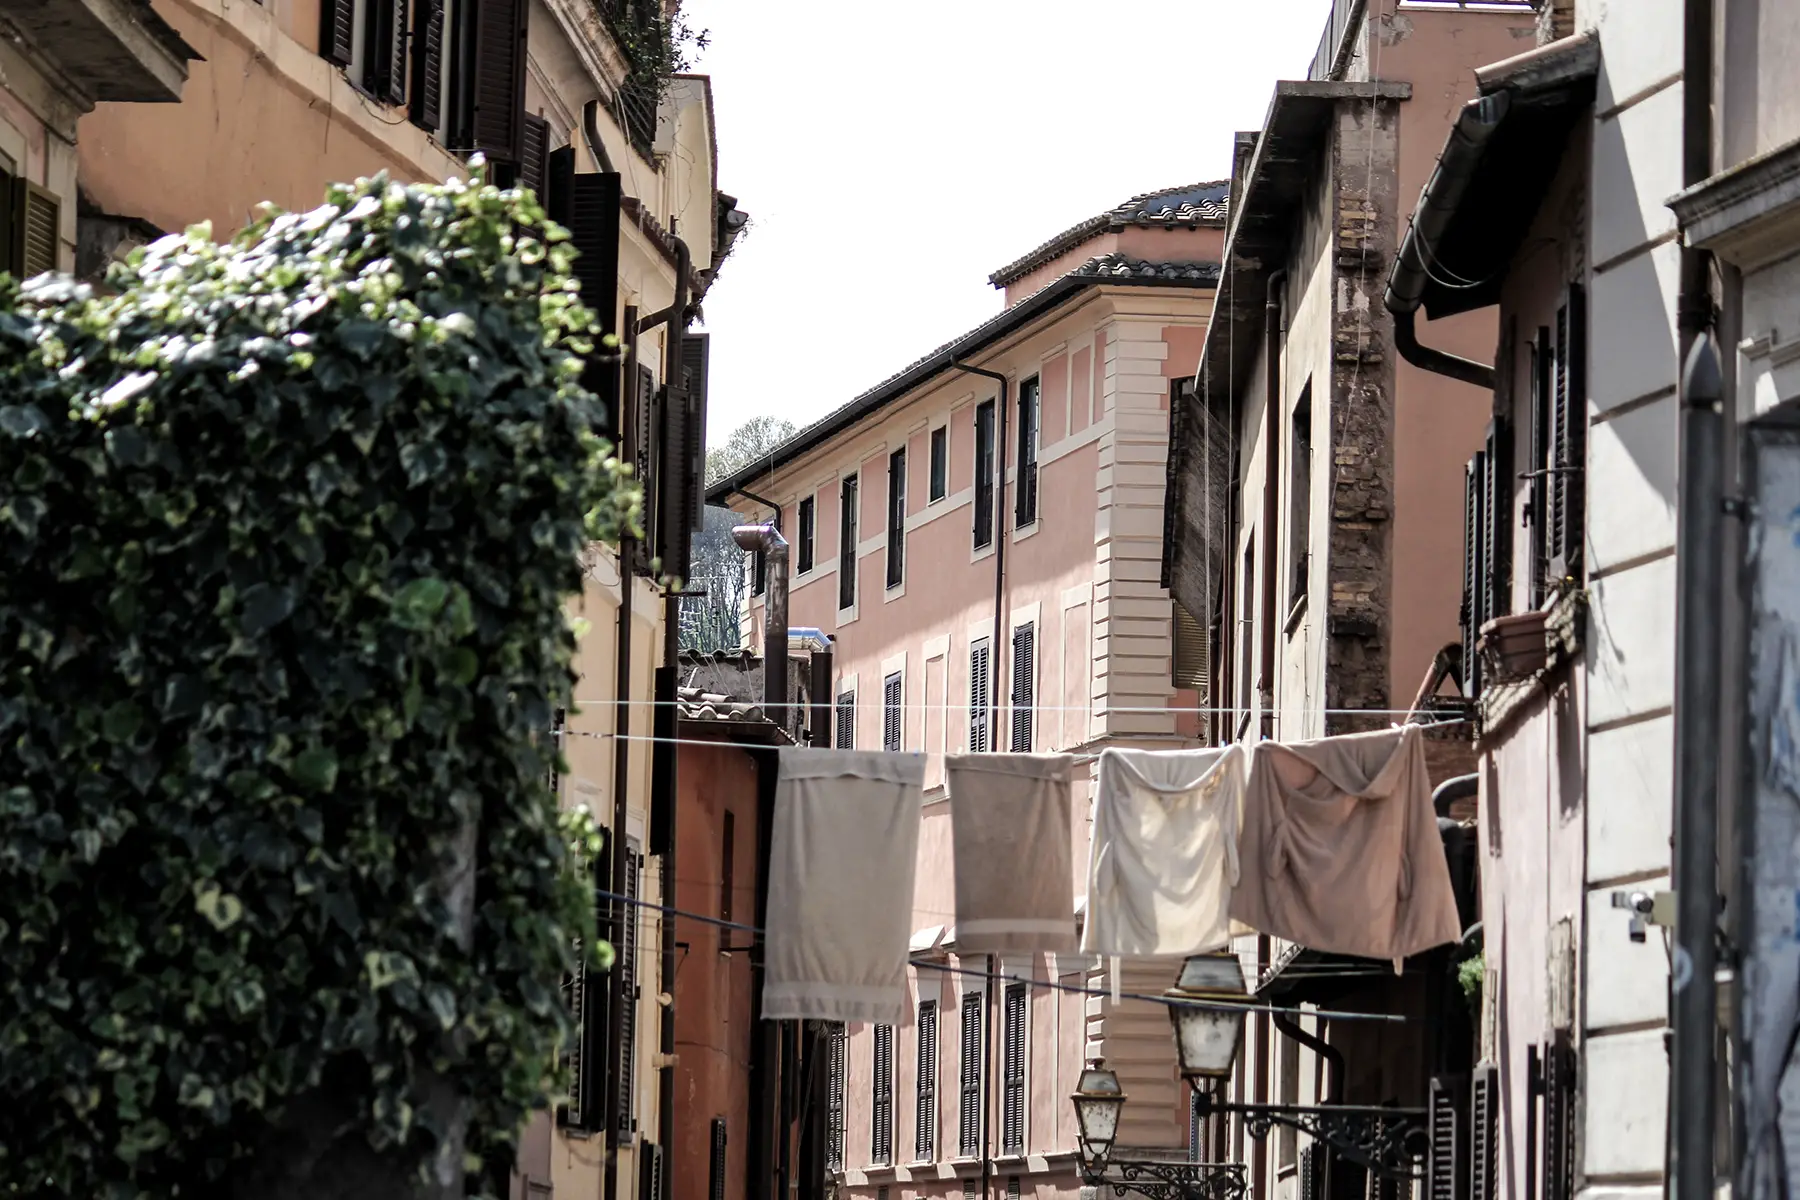 Washing hanging between buildings on a street in Trastevere, Rome